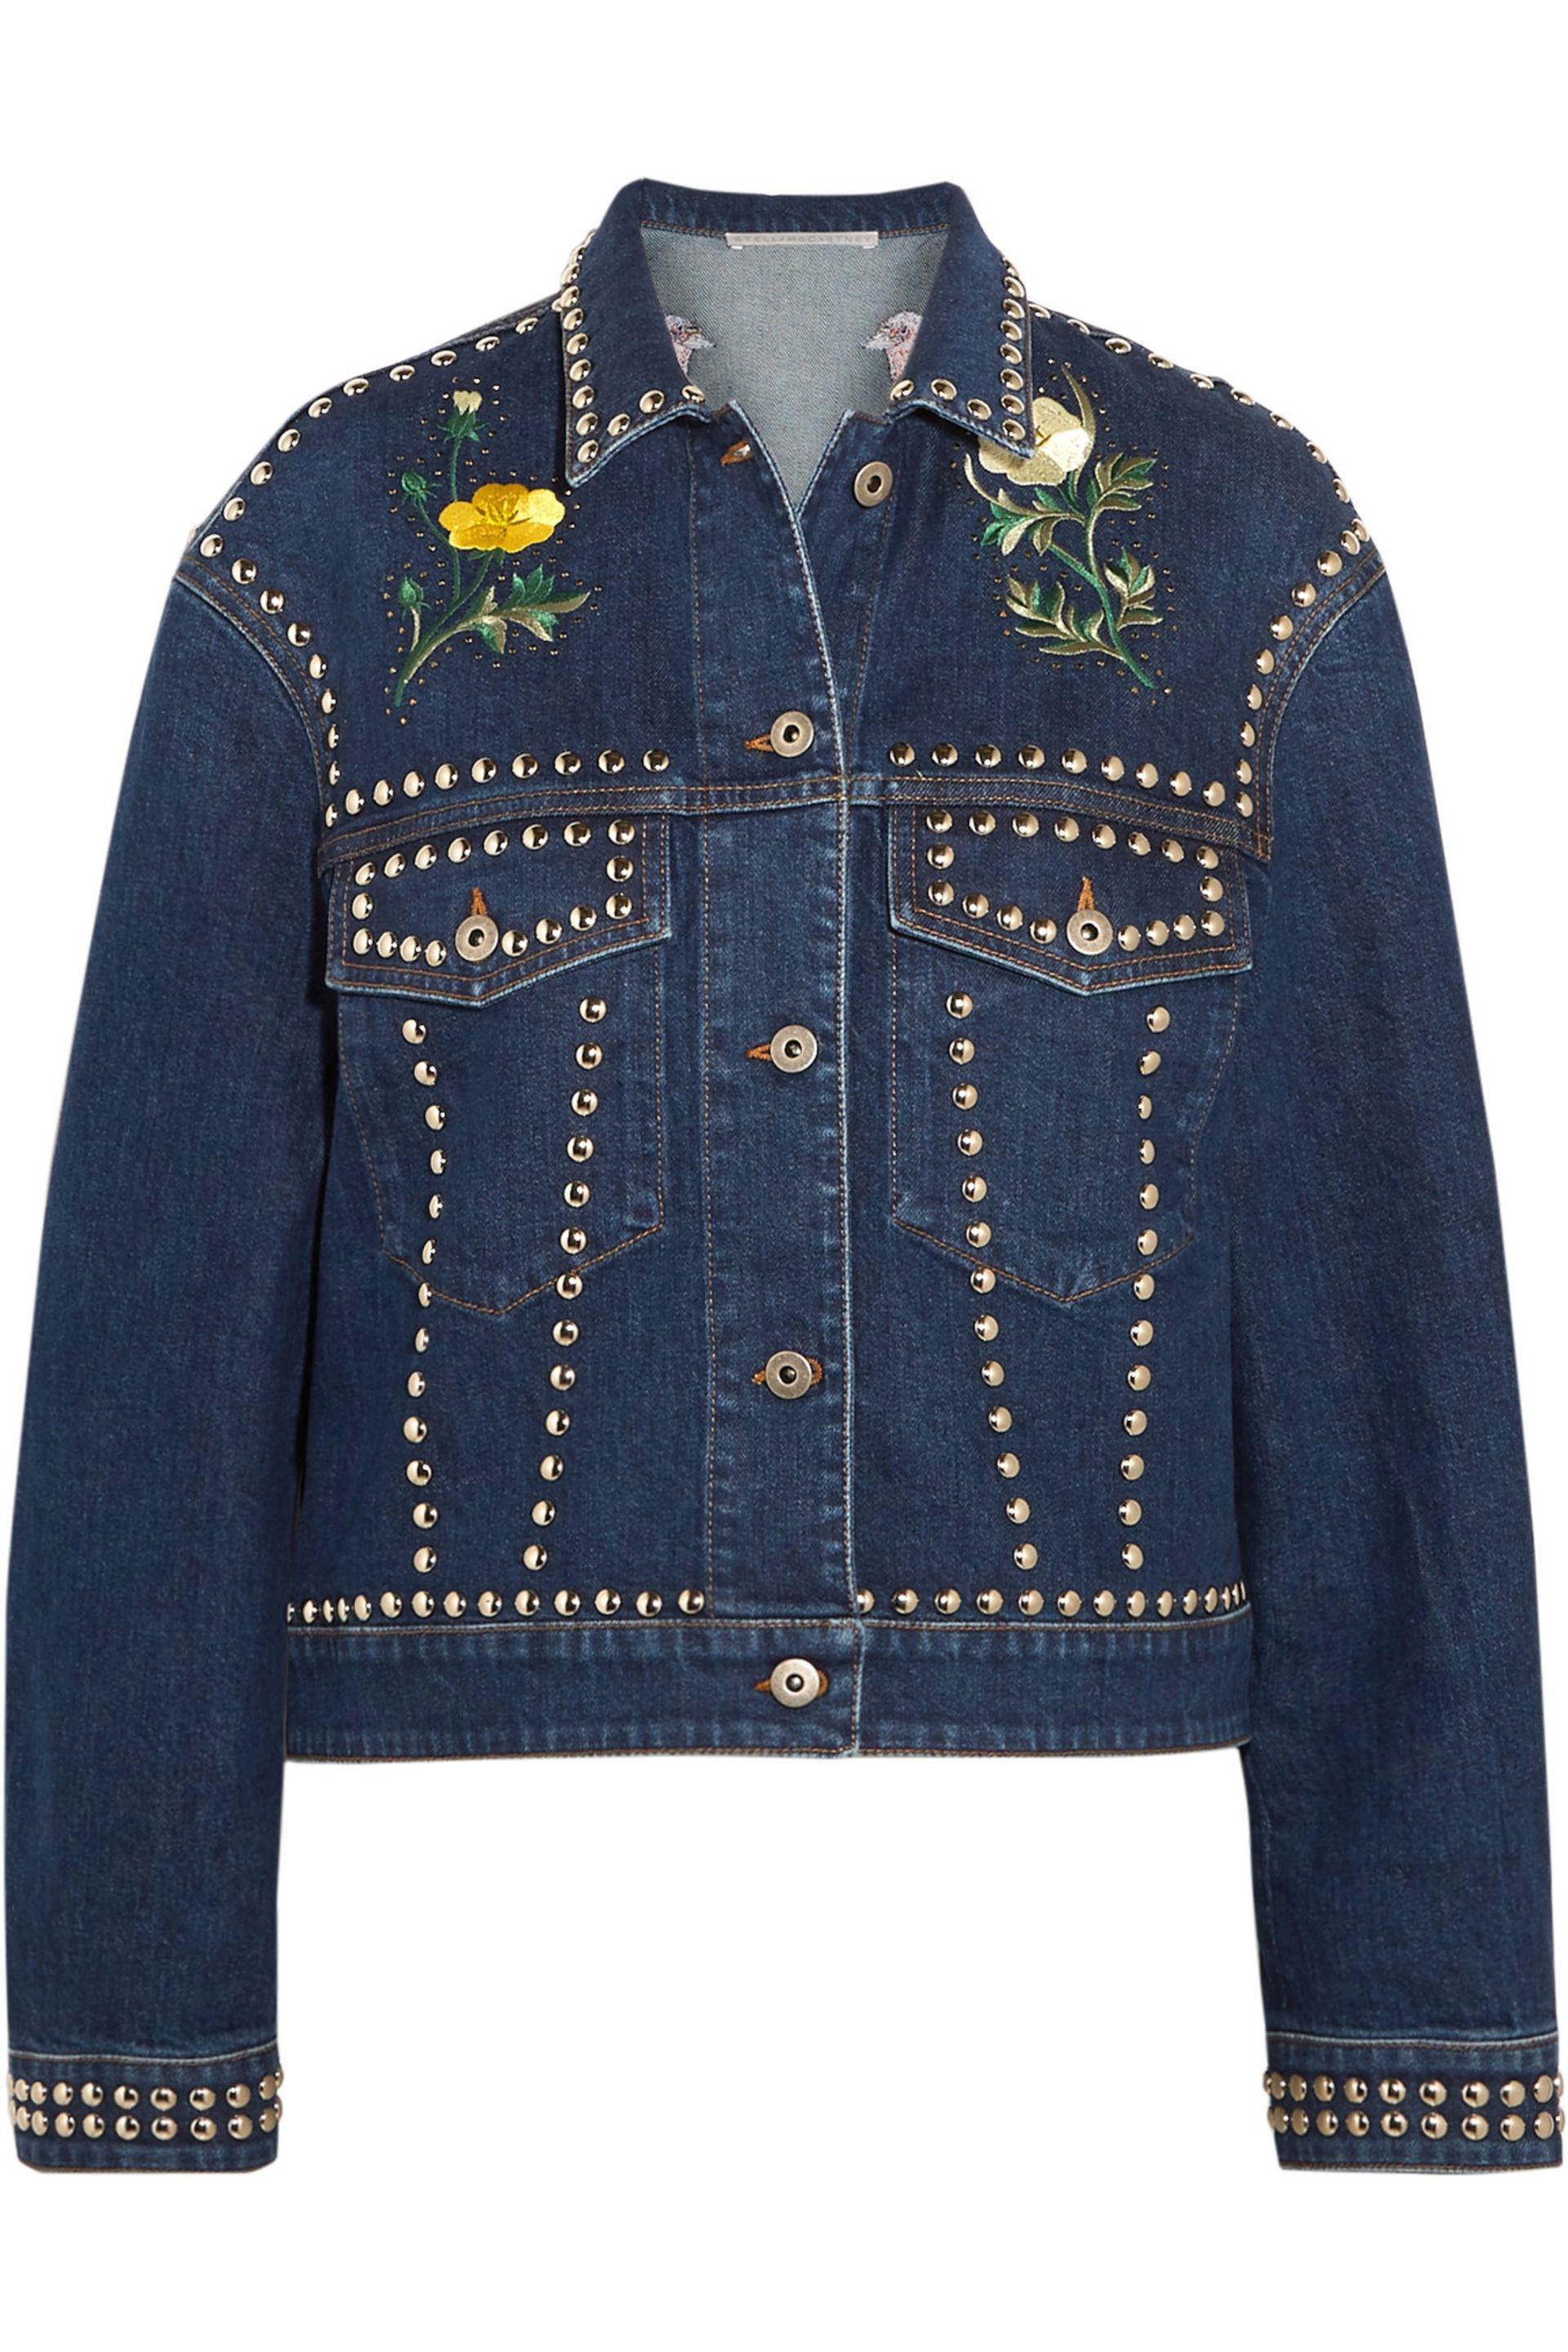 Lyst - Stella Mccartney Oversized Embellished Denim Jacket in Blue